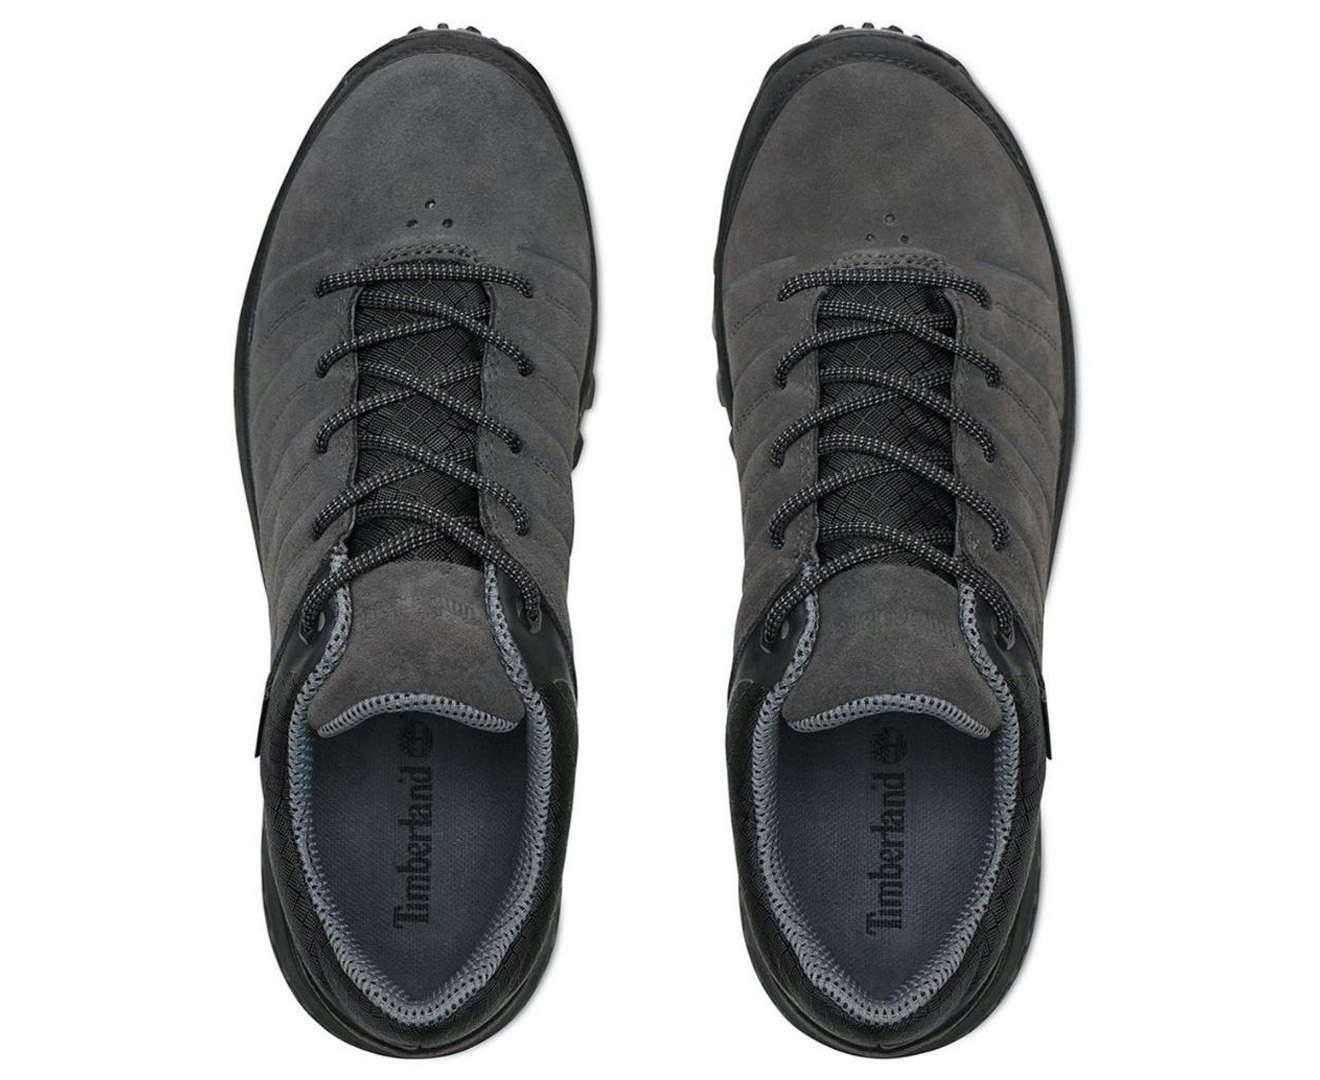 Aas Middel Missend Timberland Men's Parker Ridge GTX Low Shoes - Dark Grey | Catch.com.au